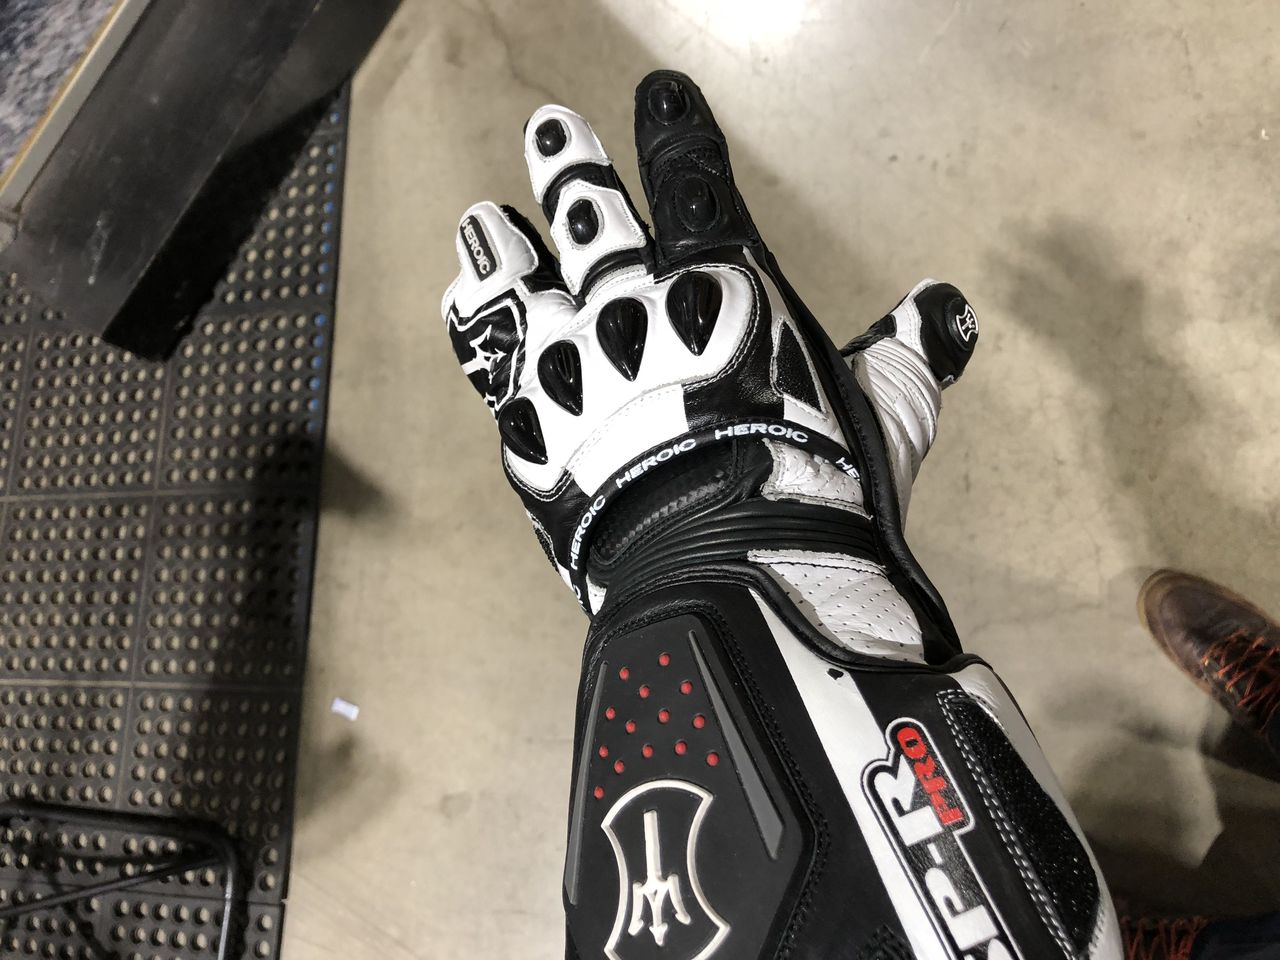 Heroic’s top-shelf SP-R Pro V1 gloves